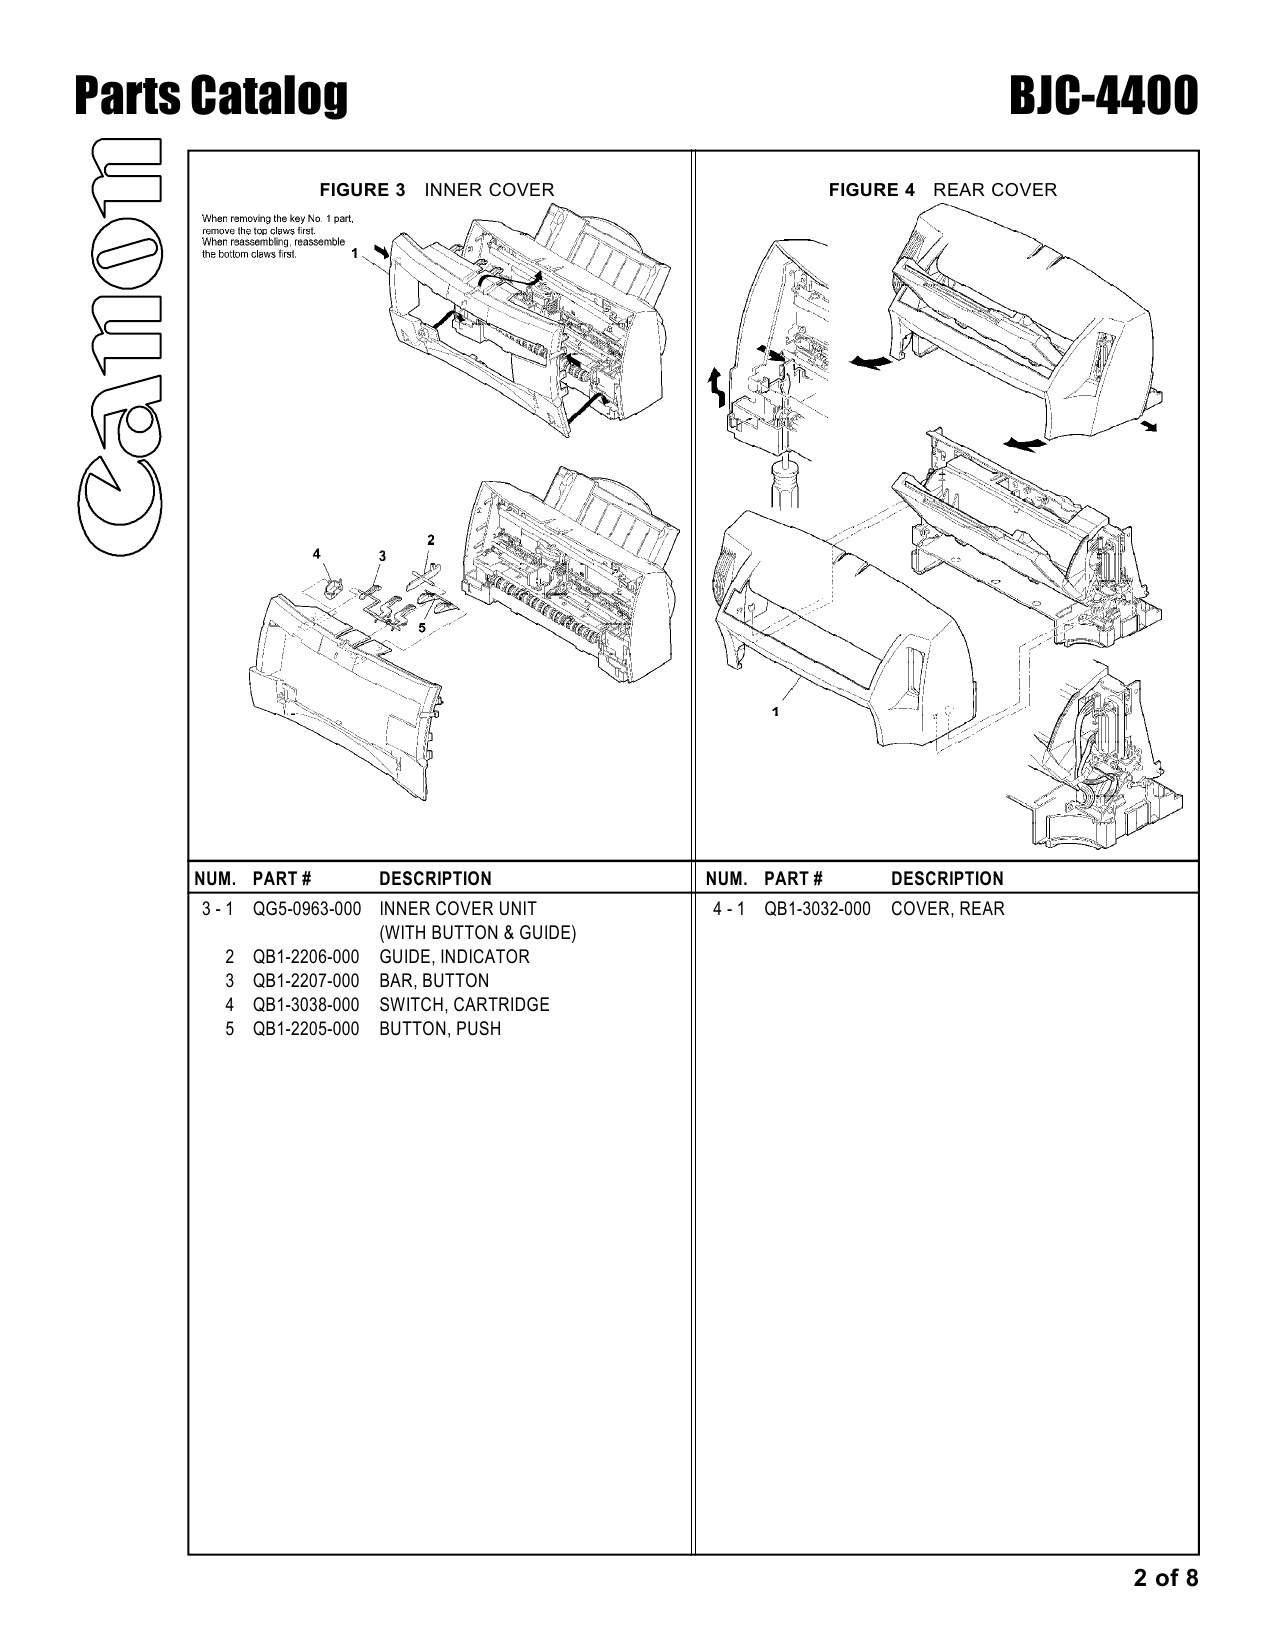 Canon BubbleJet BJC-4400 Parts Catalog Manual-2